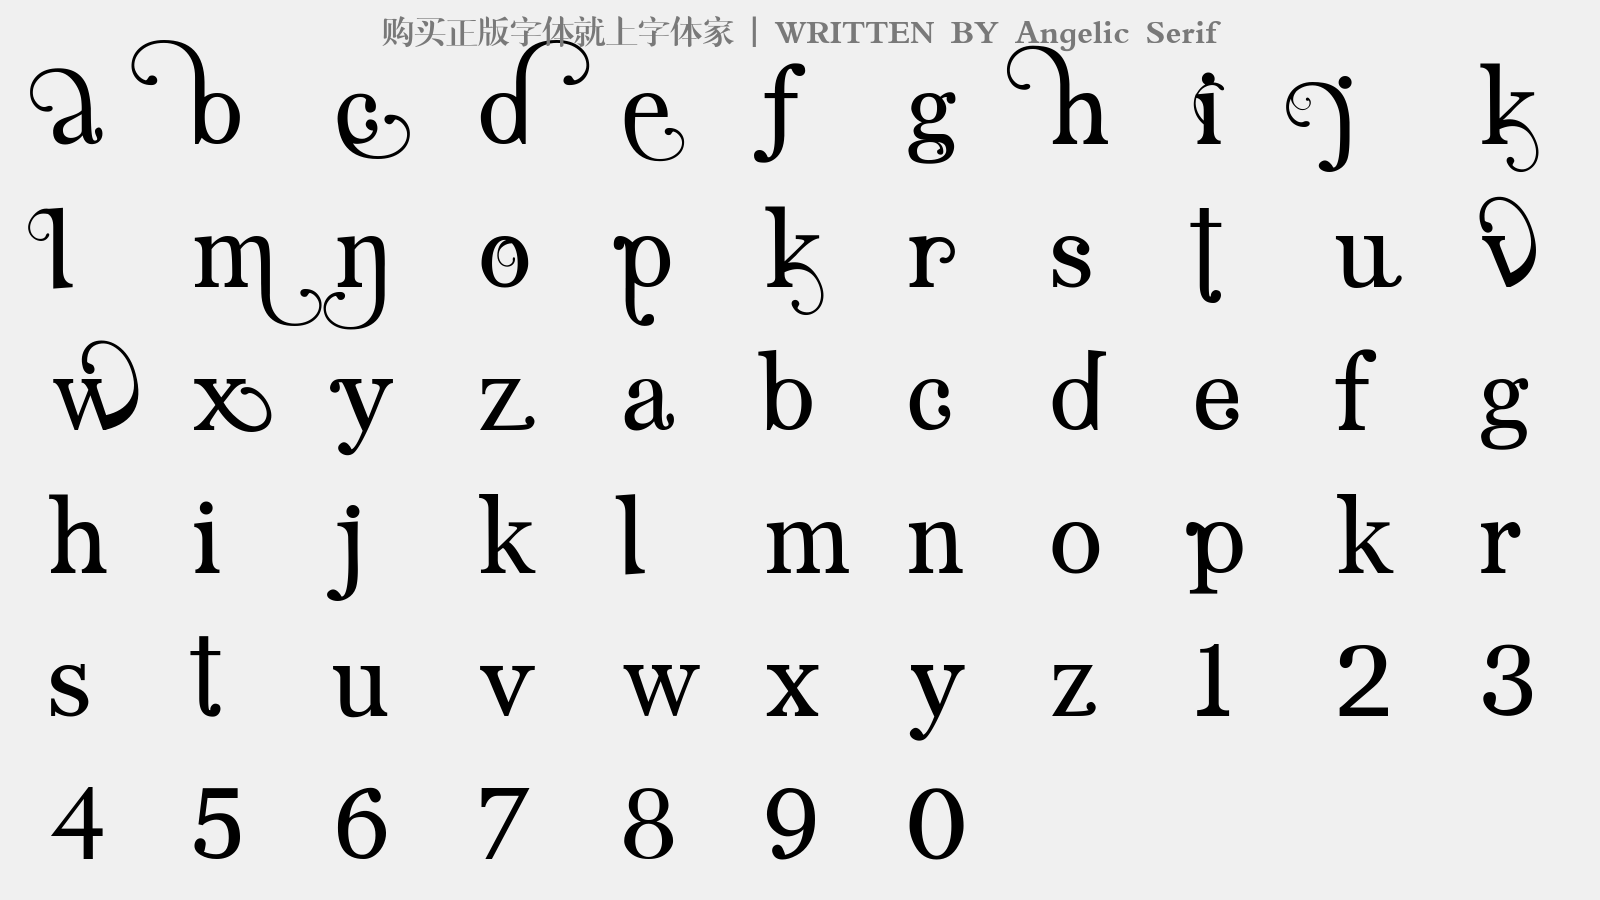 Angelic Serif - 大写字母/小写字母/数字